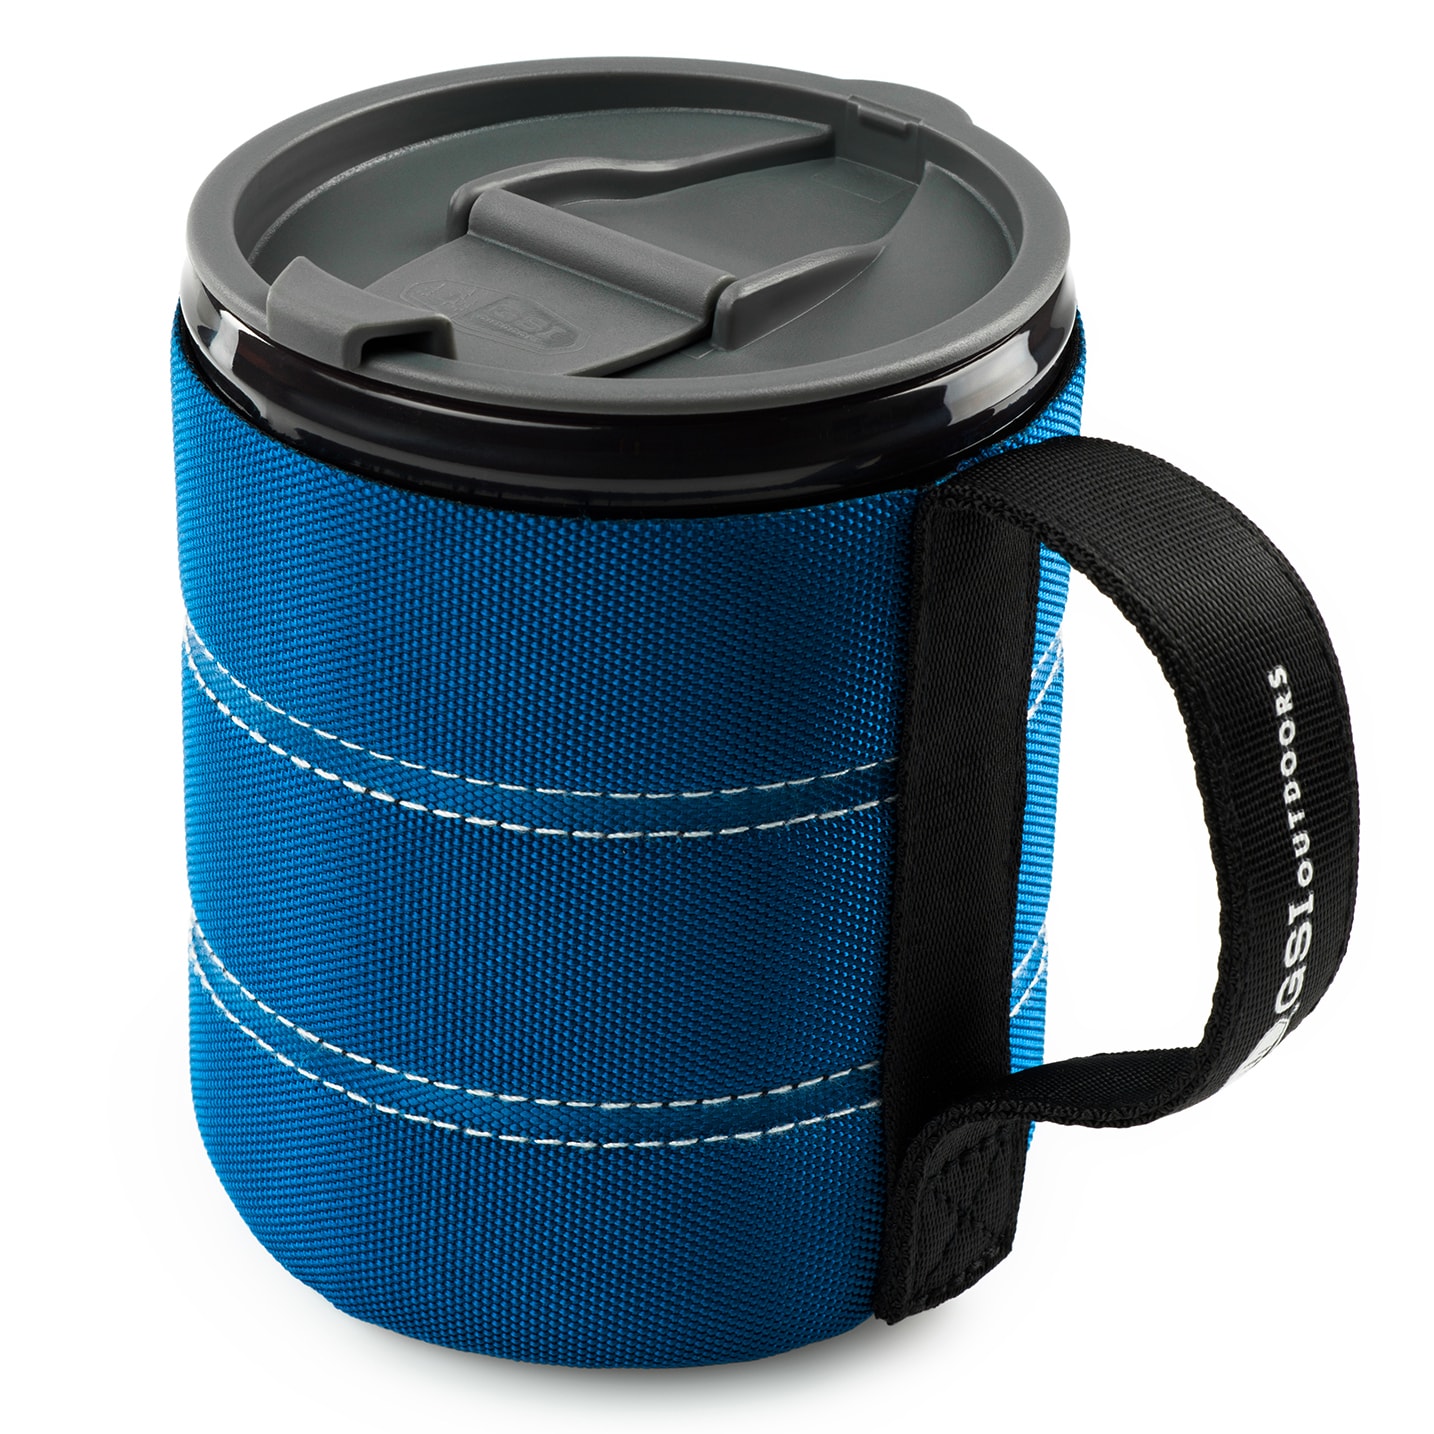 Kubek GSI Outdoors Infinity Backpacker Mug Blue 0,5 l